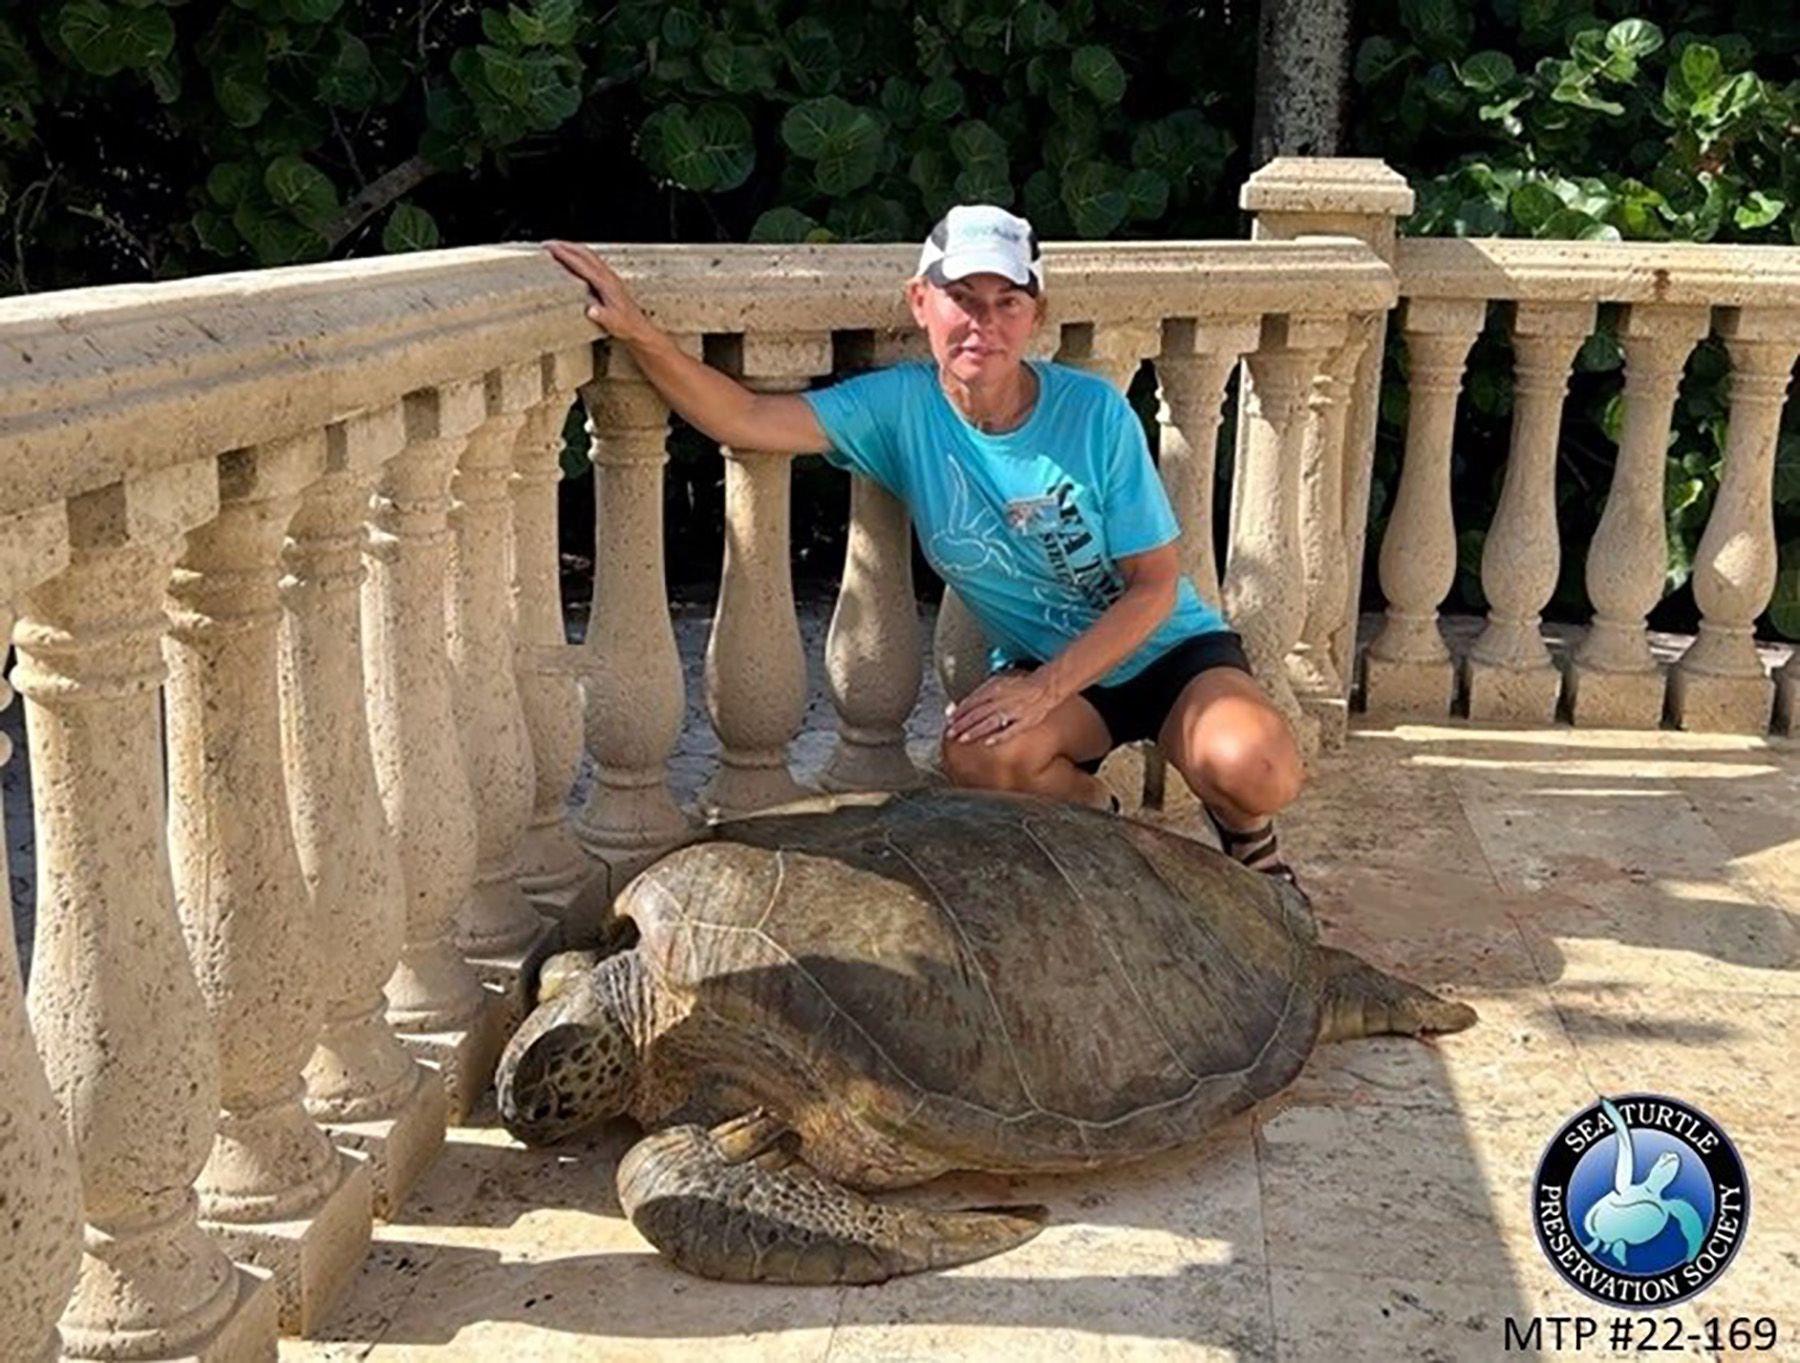 giant sea turtle